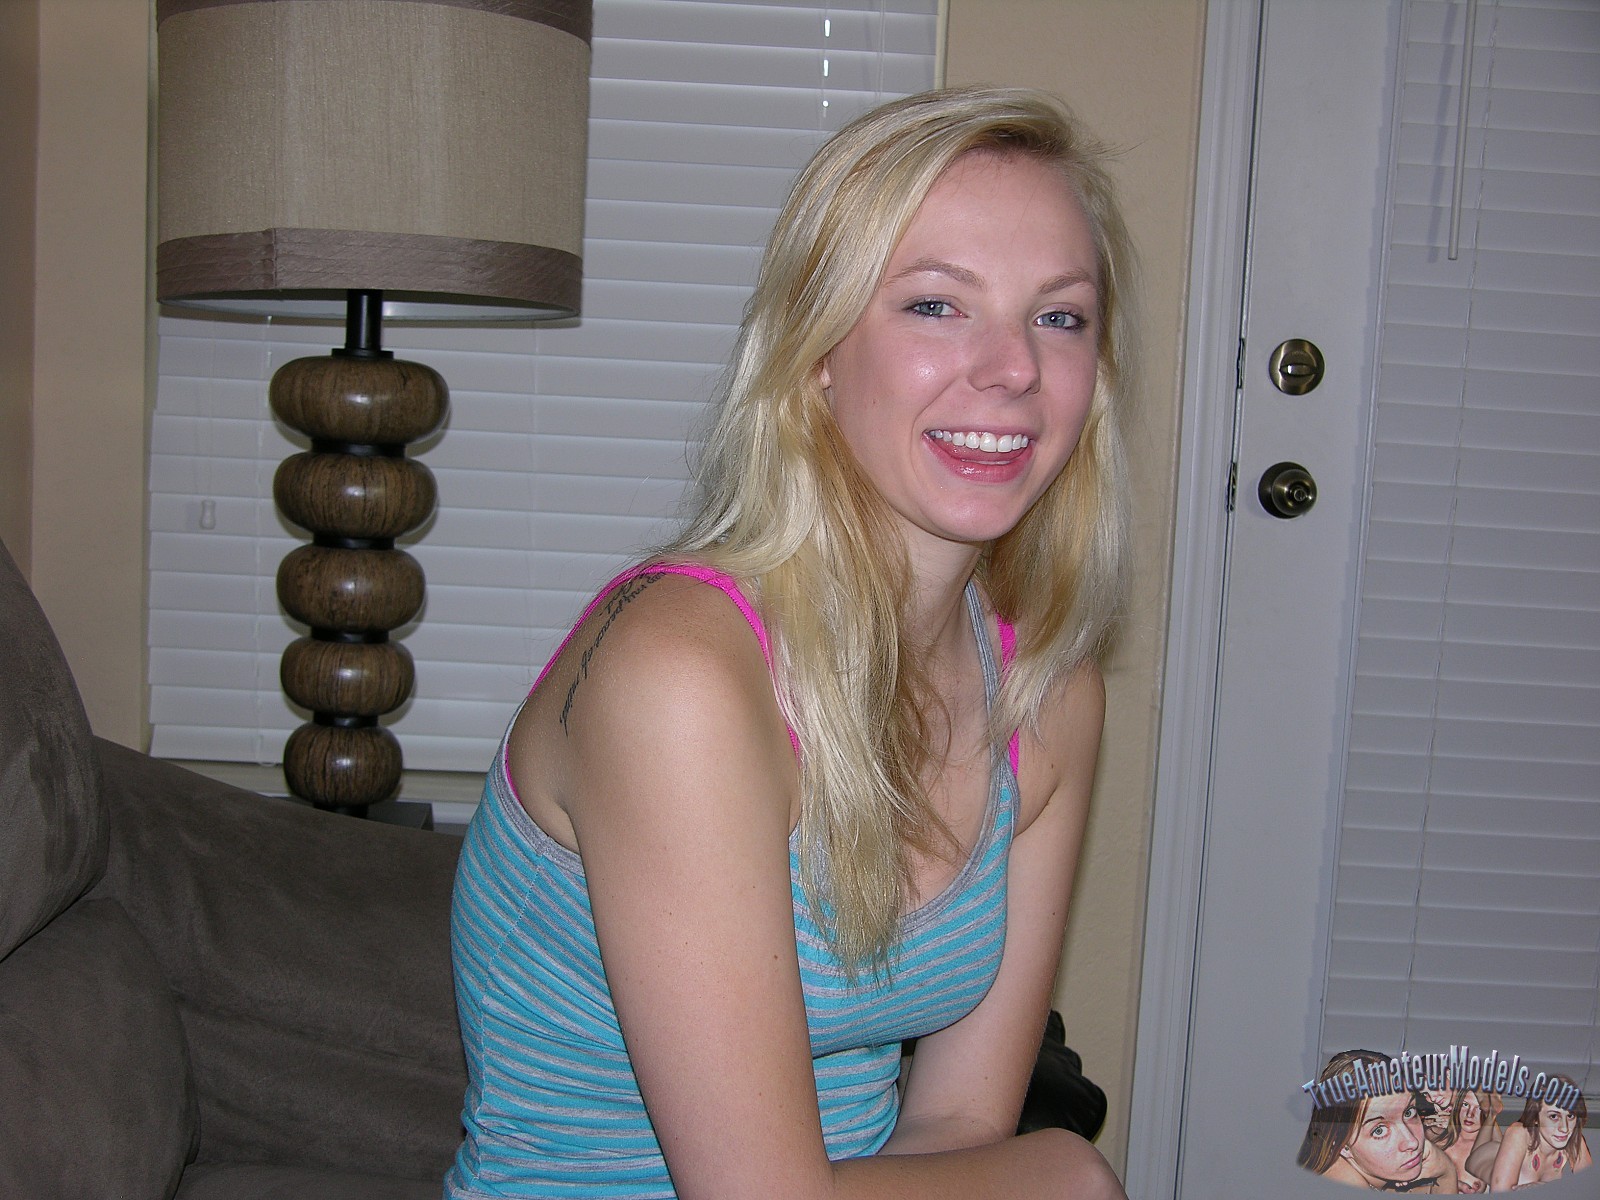 xpics - girlfriend sex Hot amateur blonde teen spreads butthole image image